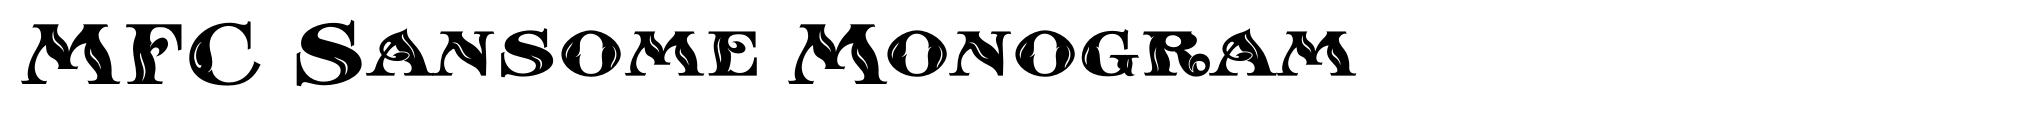 MFC Sansome Monogram image